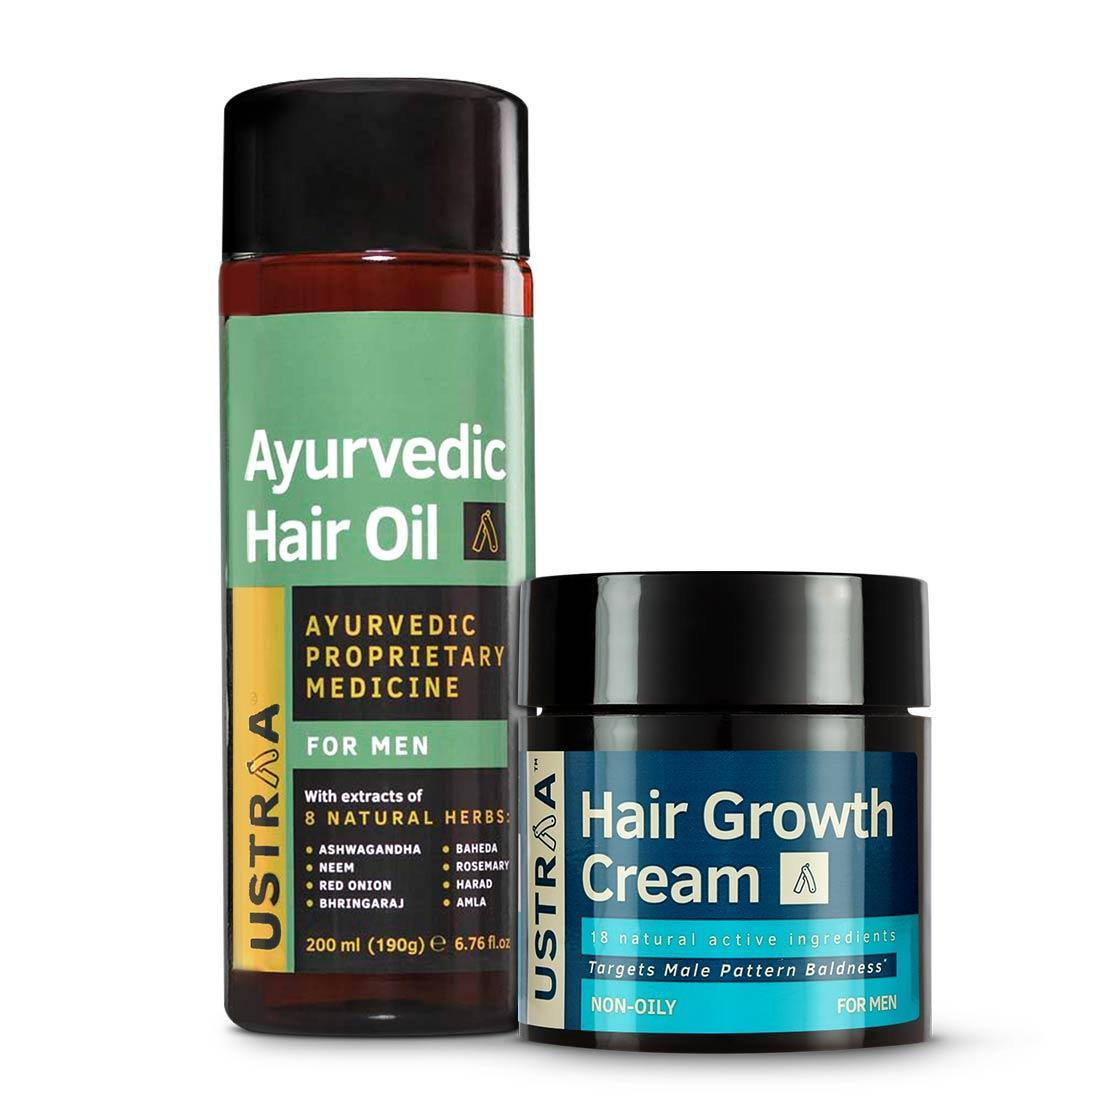 Ayurvedic Hair Oil & Hair Growth Cream